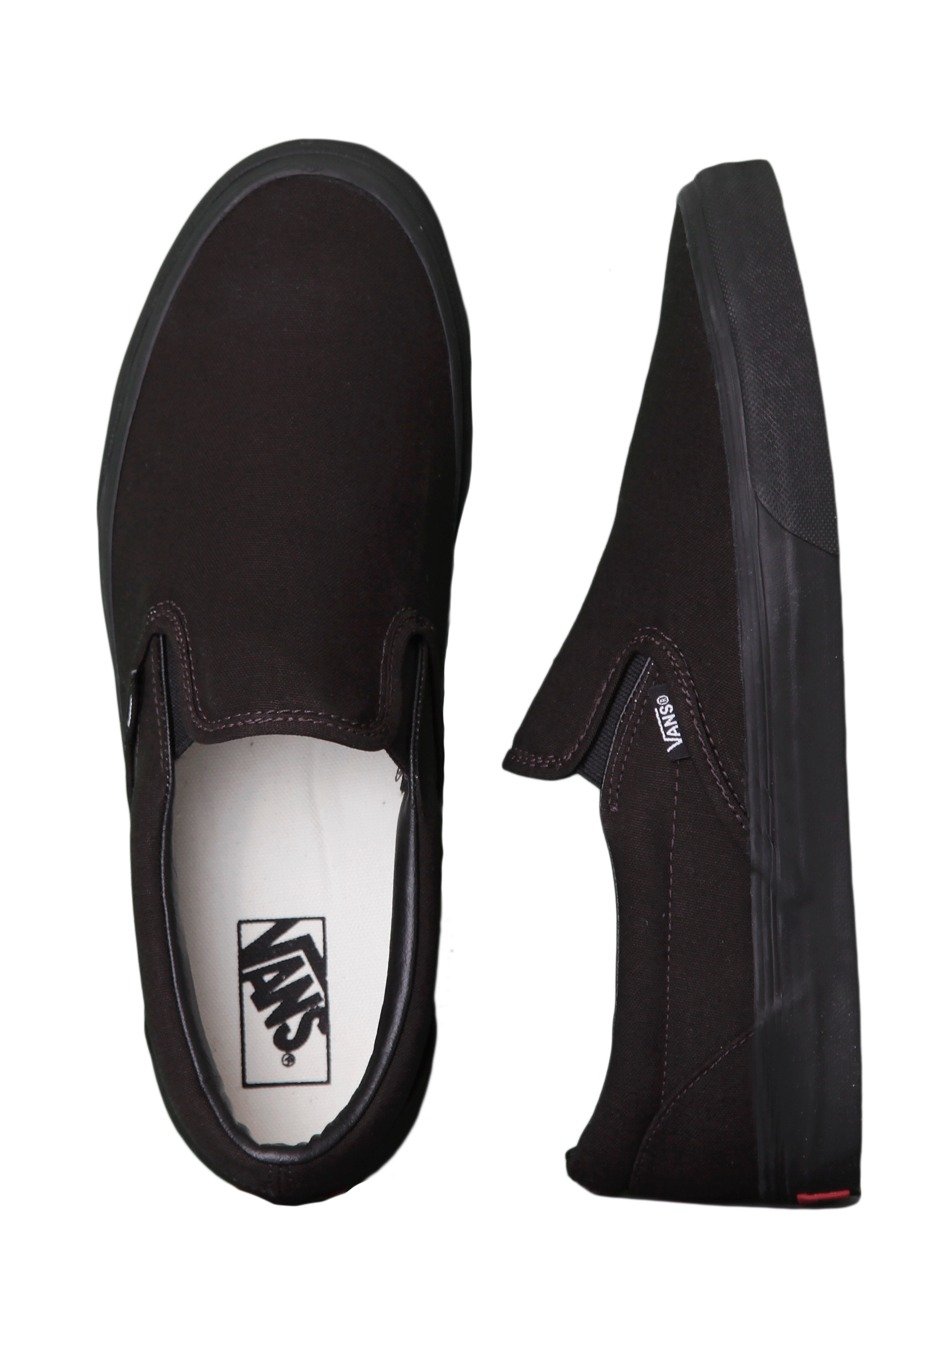 Vans - Classic Slip-On Black/Black - Shoes